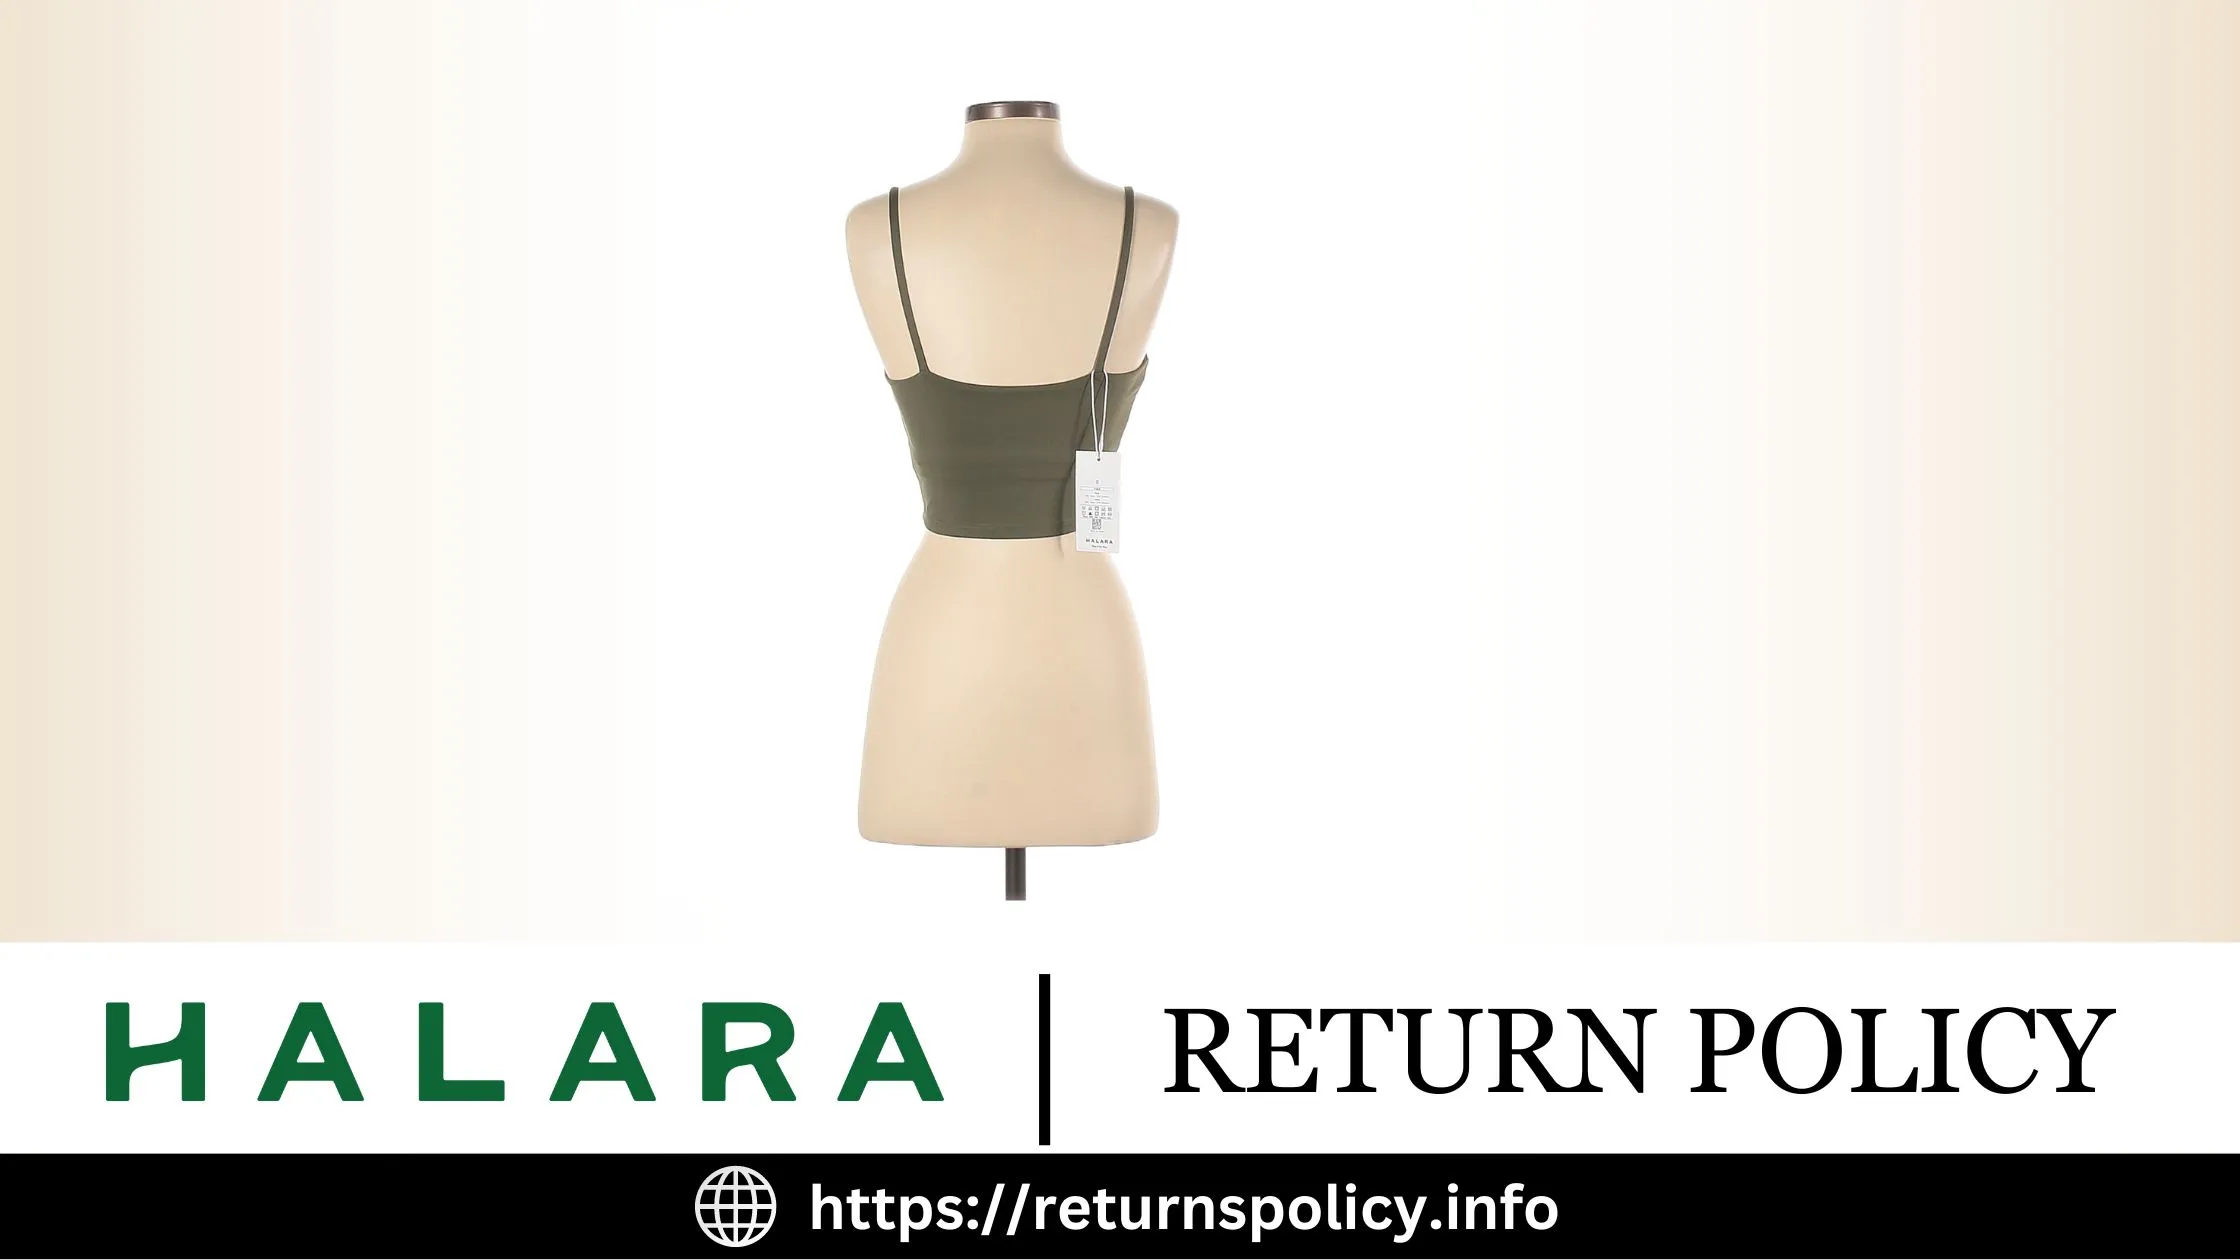 Halara Return Policy